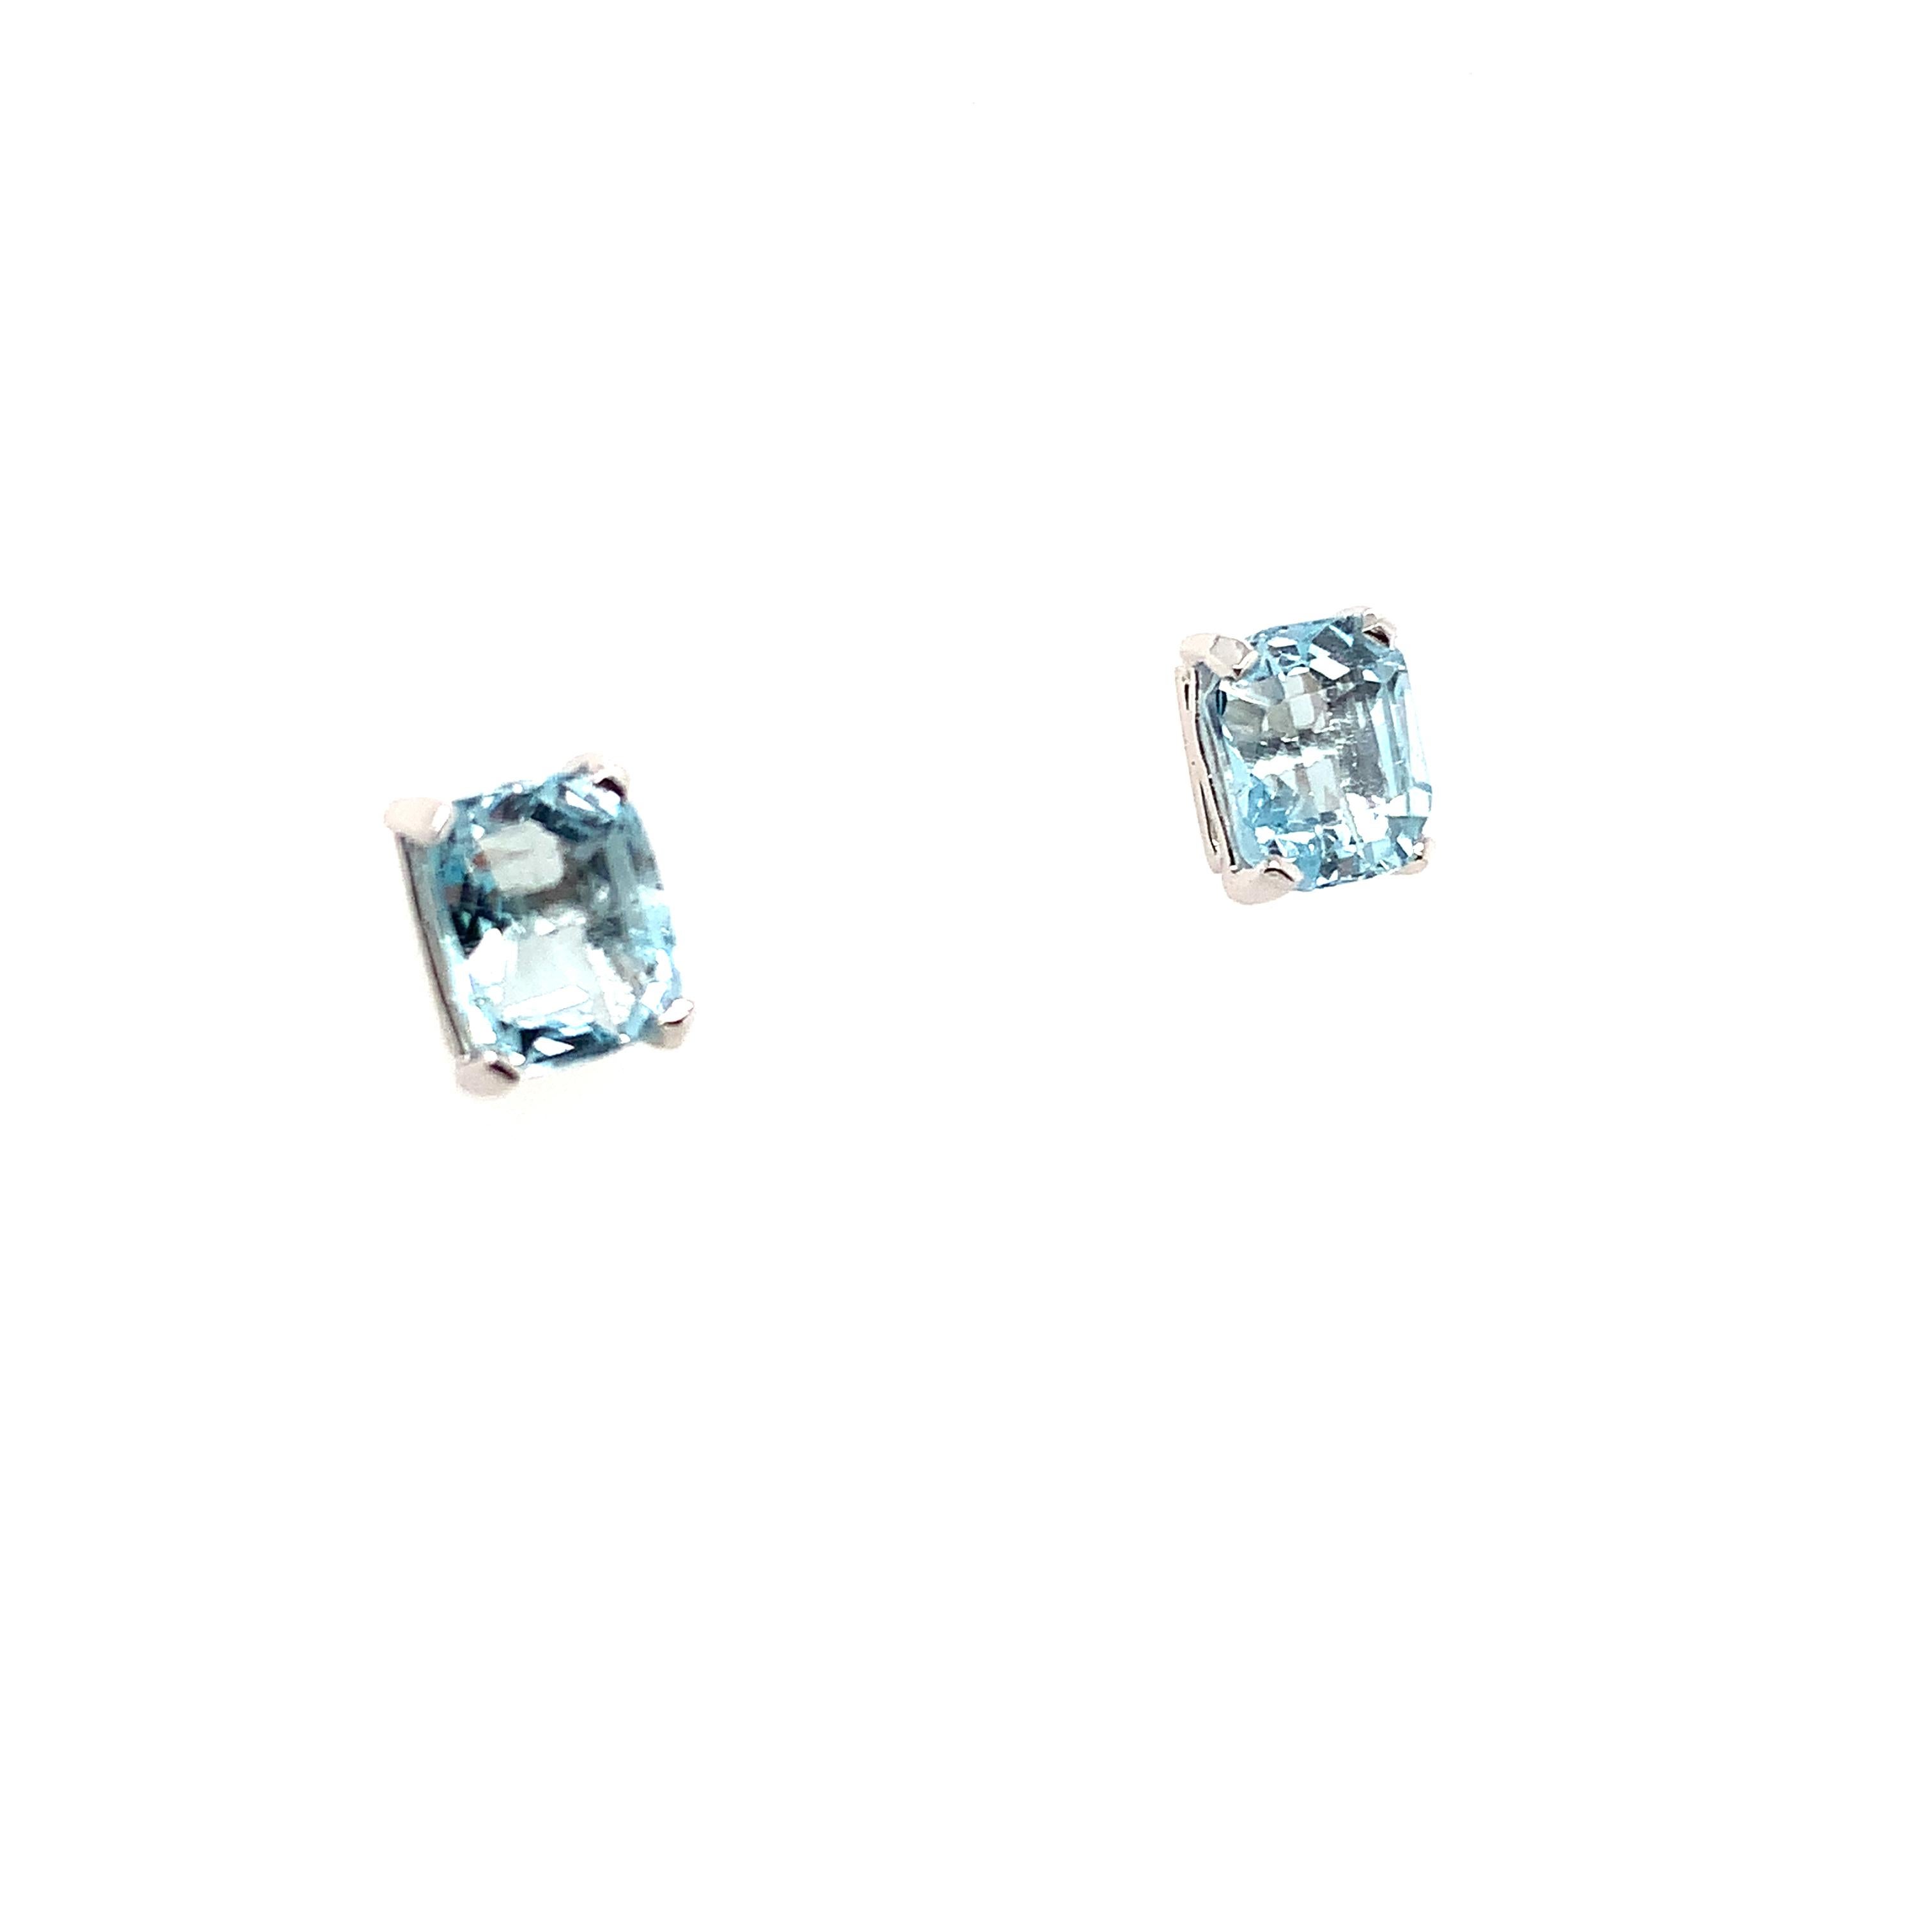 Emerald Cut Aquamarine emerald cut solitaire stud earrings 18k white gold For Sale